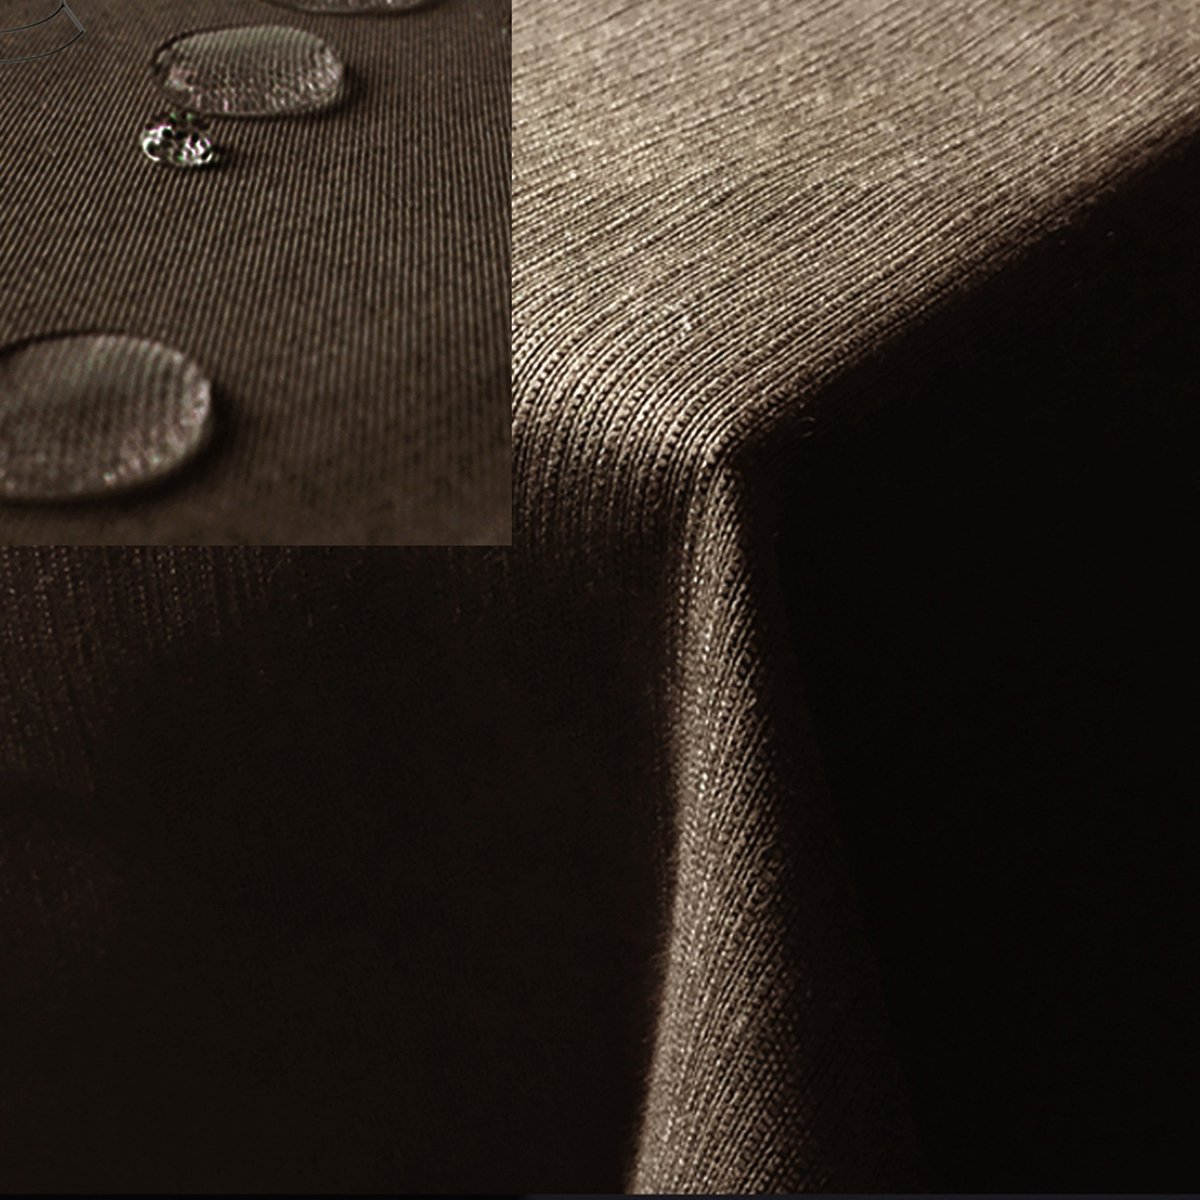 JEMIDI stoffen tafelkleed 135 x 180 cm - Voor binnen of buiten - Waterafstotend en vlekbestendig - In donkerbruin